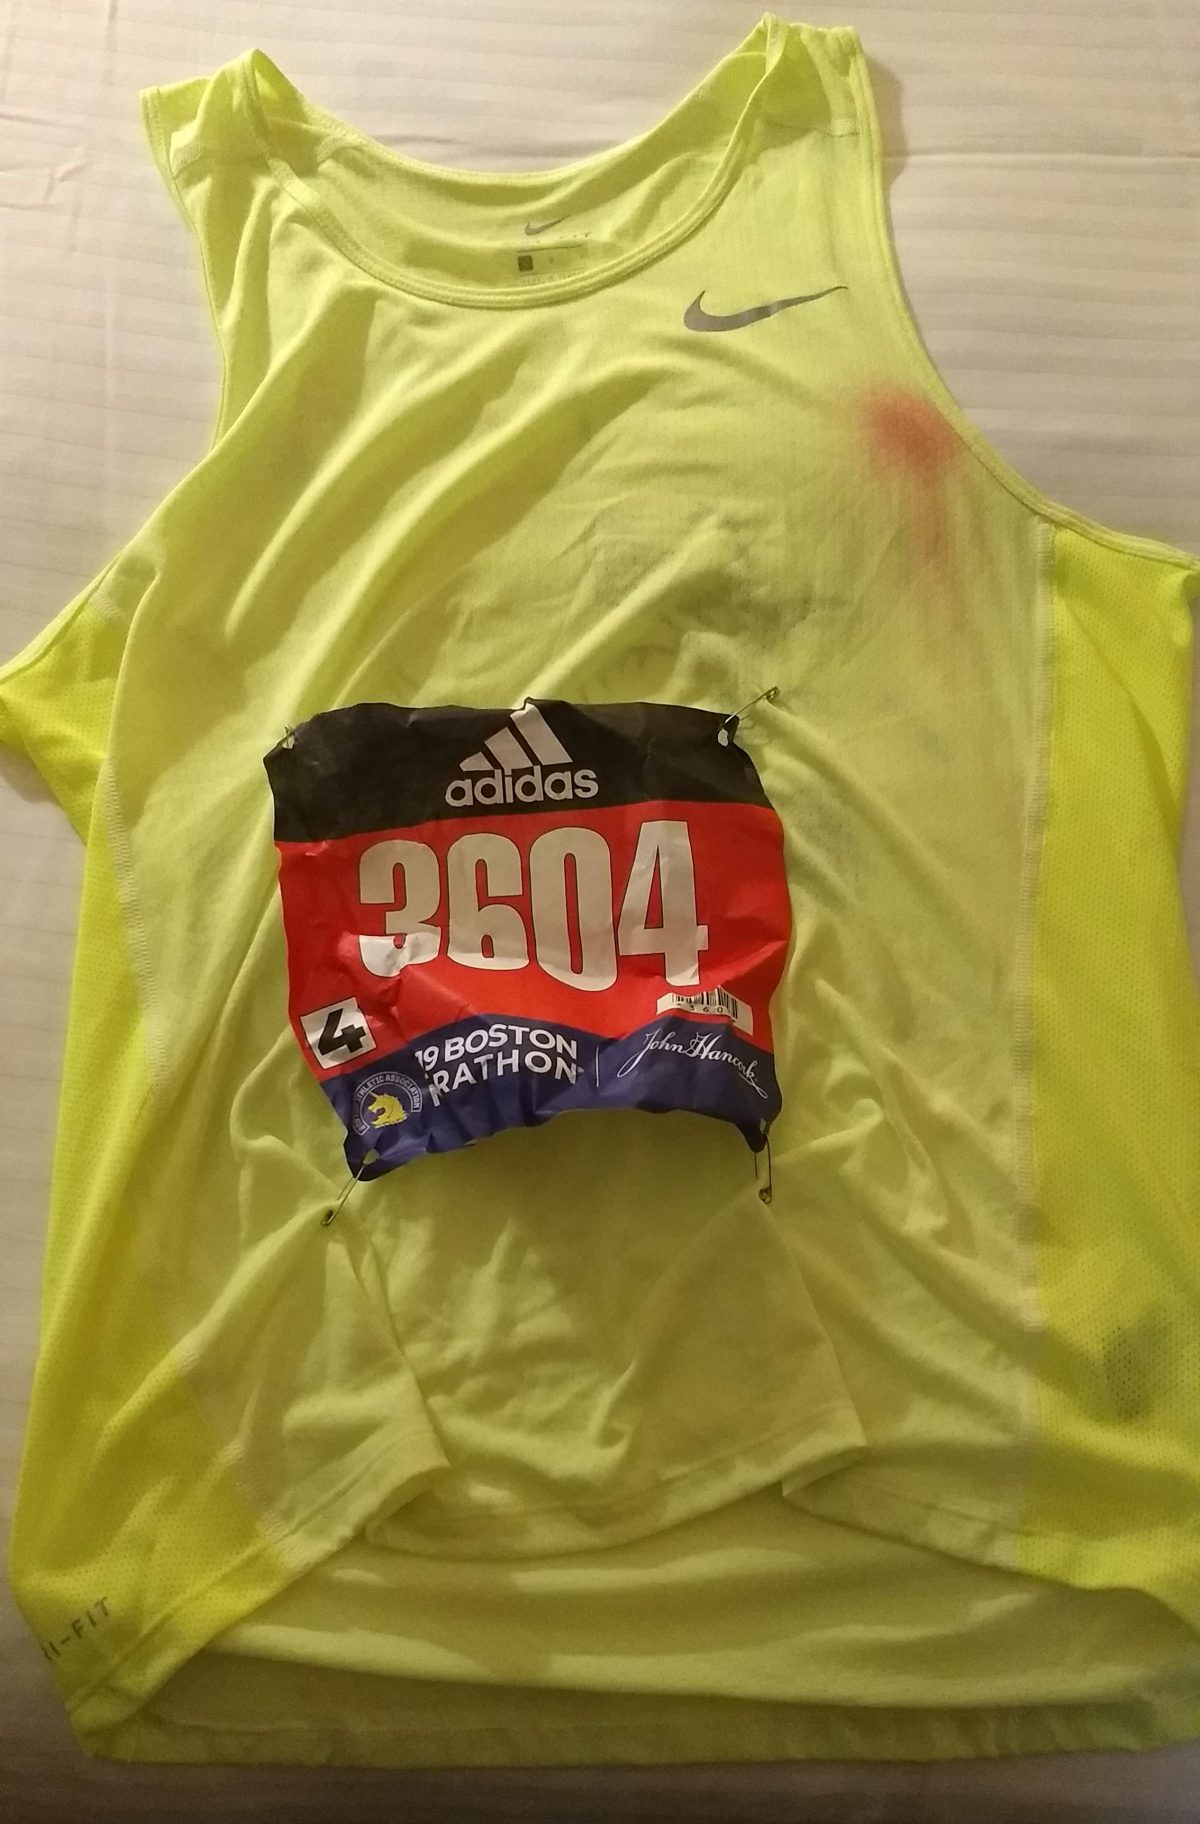 123rd Boston Marathon (2019) Race Report